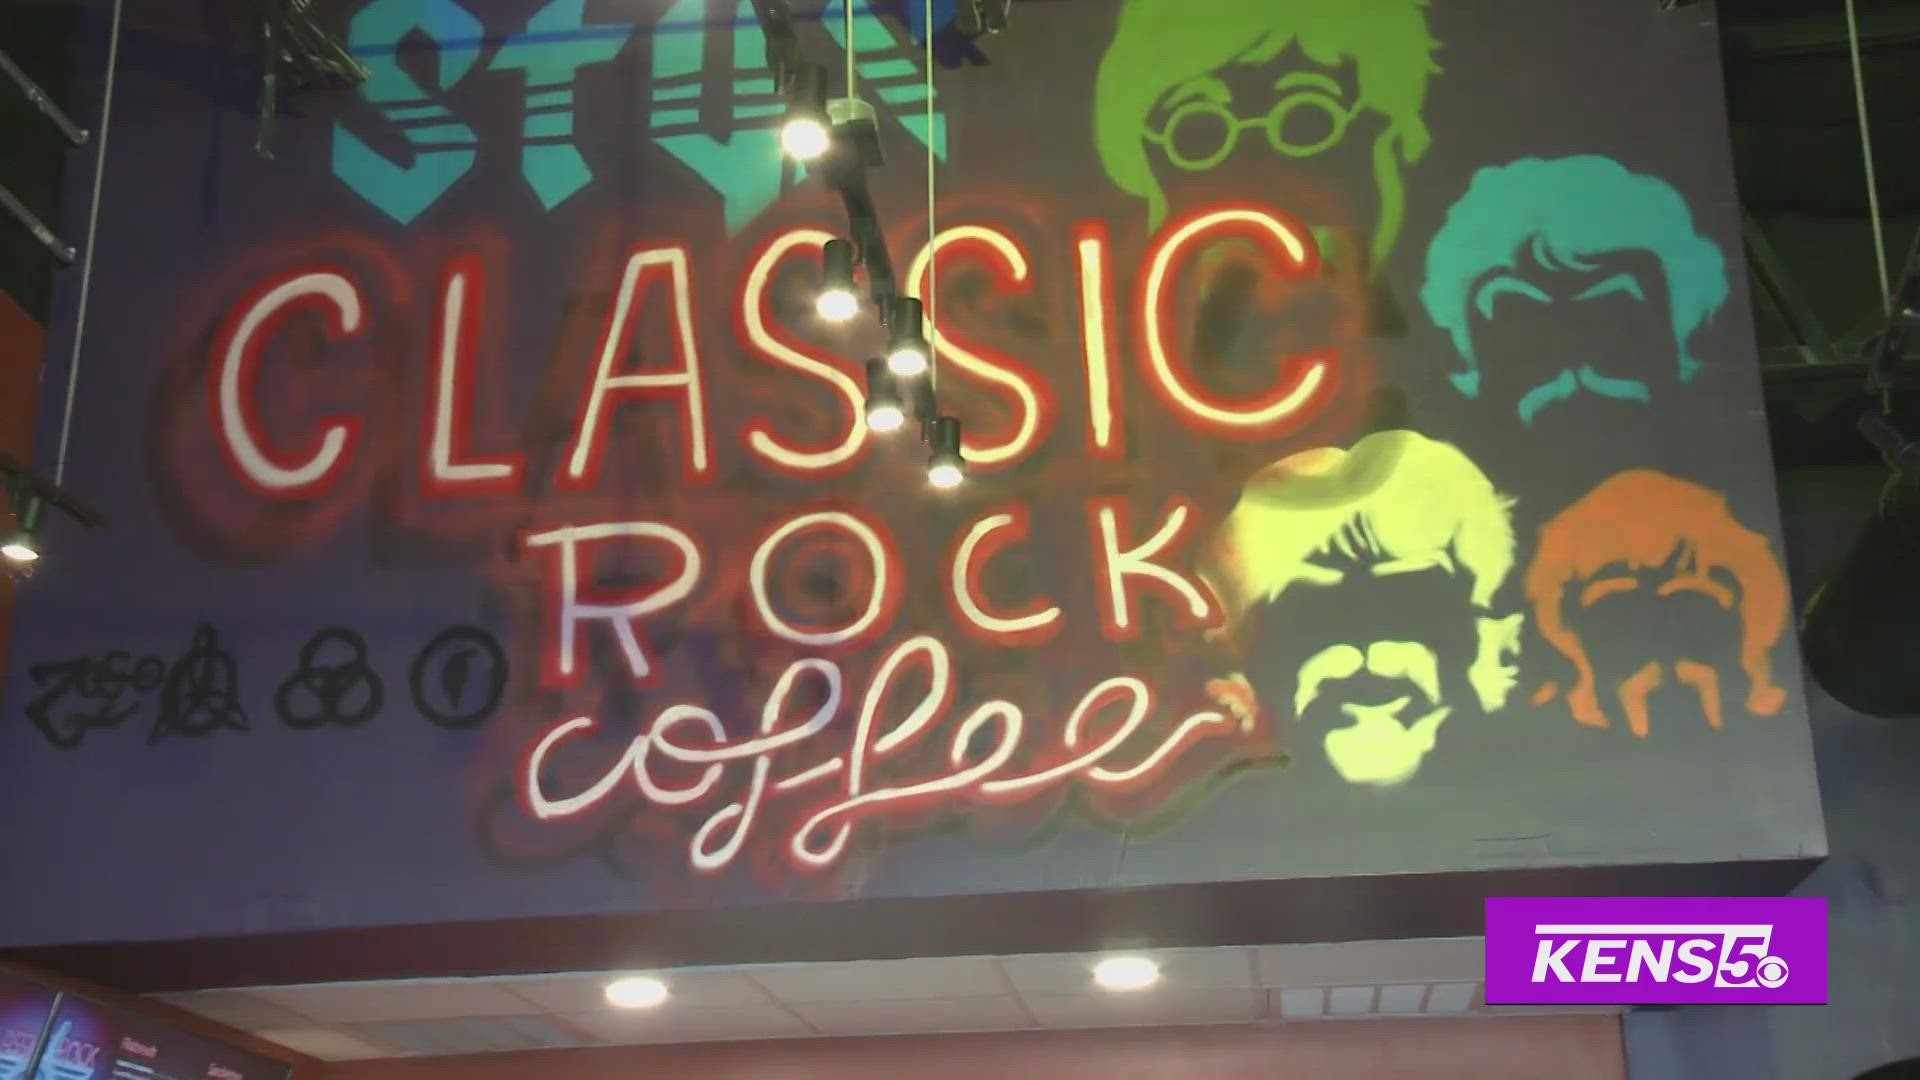 Clarke visits San Antonio's newest coffee shop Classic Rock Coffee.